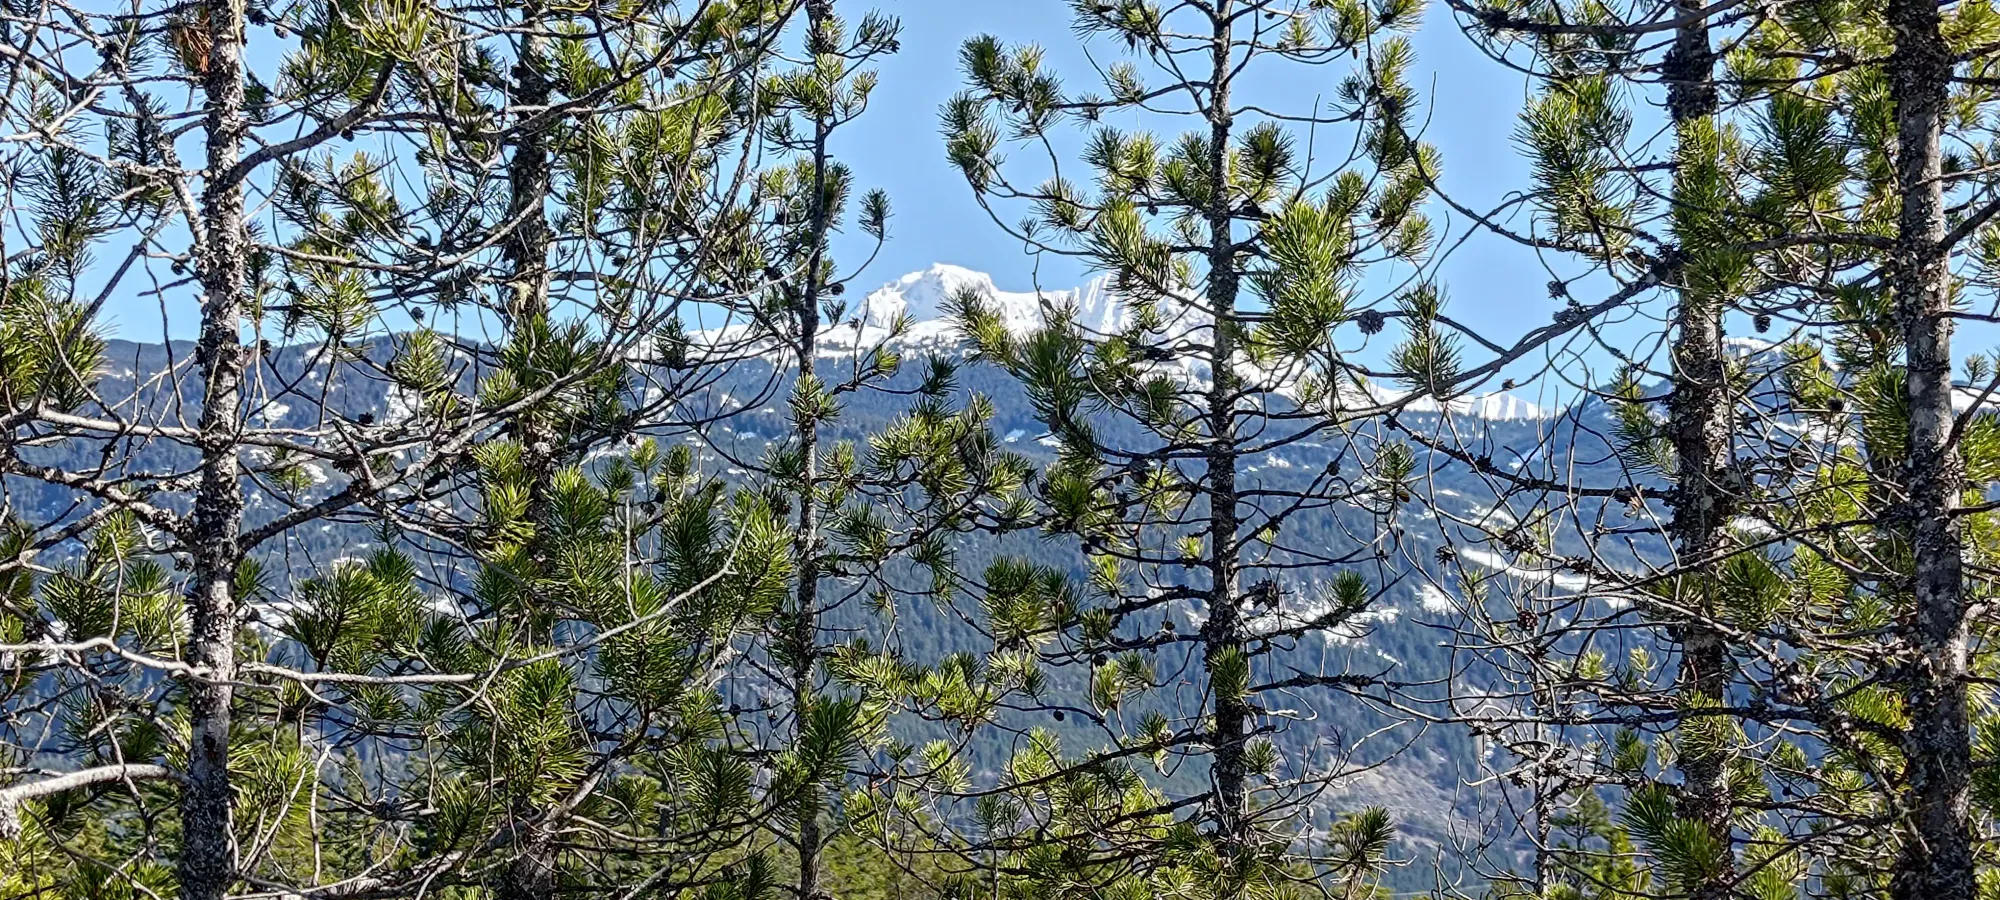 Levette Peak - March 16 2024